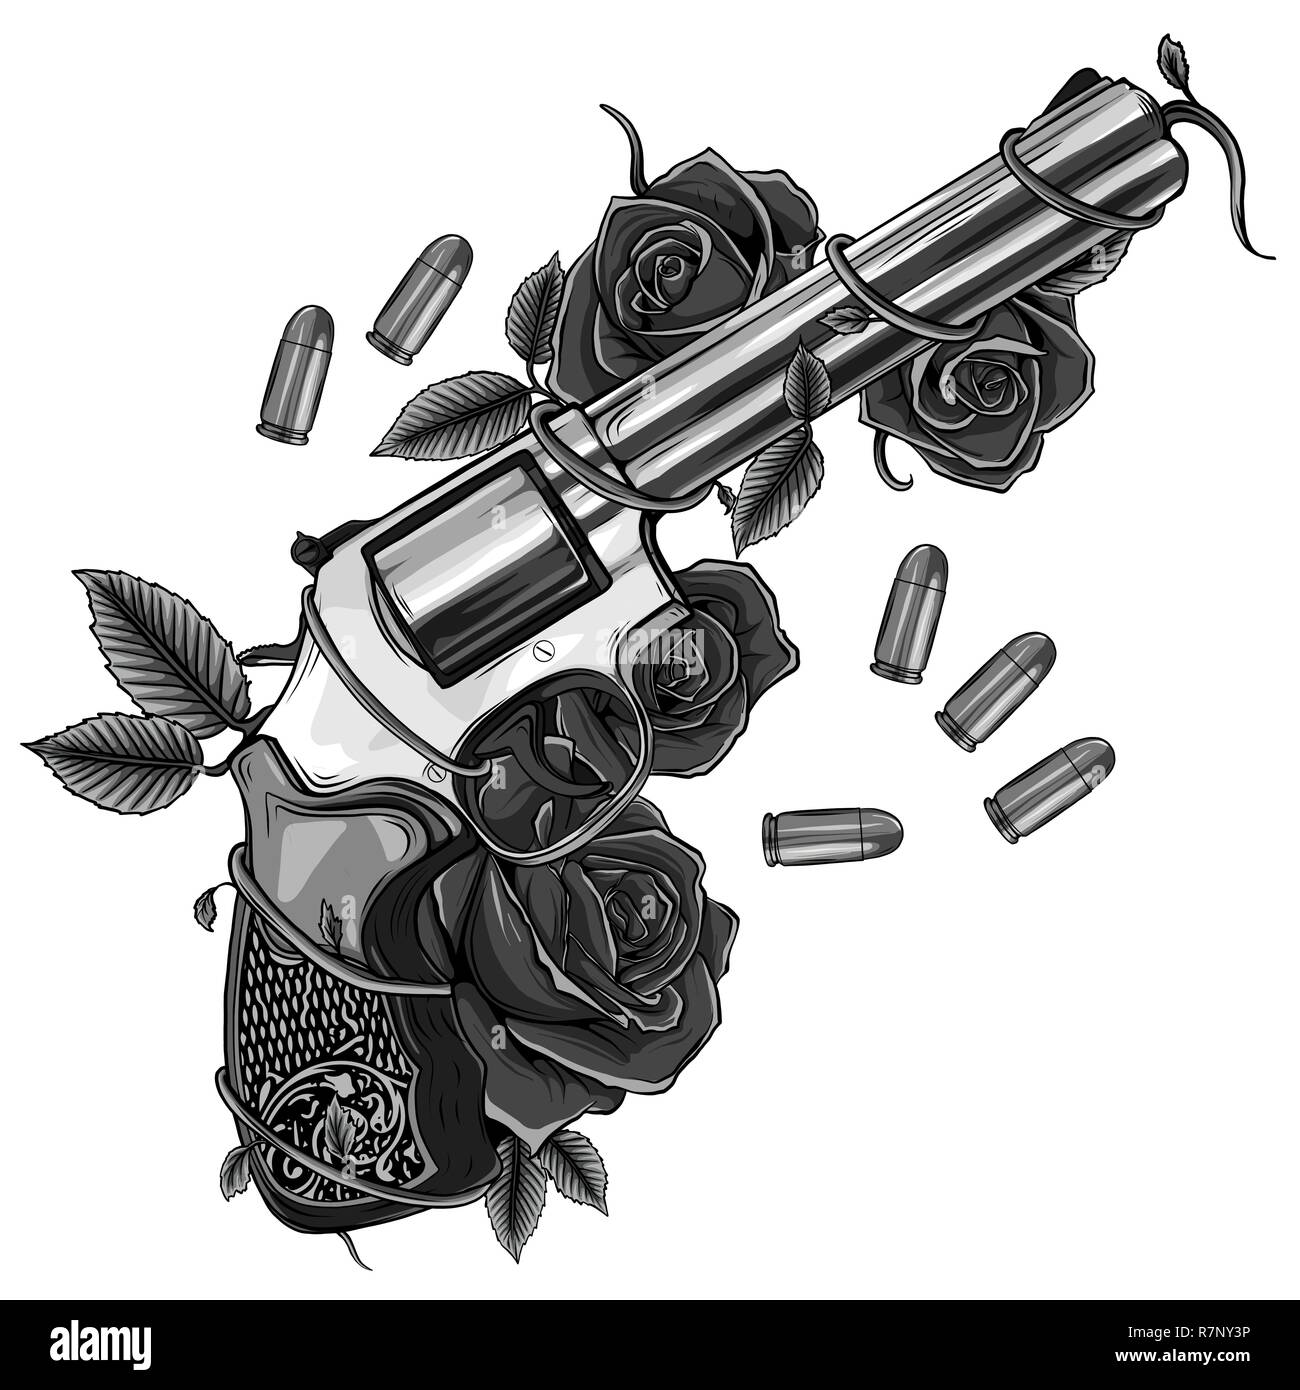 100 Pics Of A Crossed Pistols Tattoo Illustrations RoyaltyFree Vector  Graphics  Clip Art  iStock